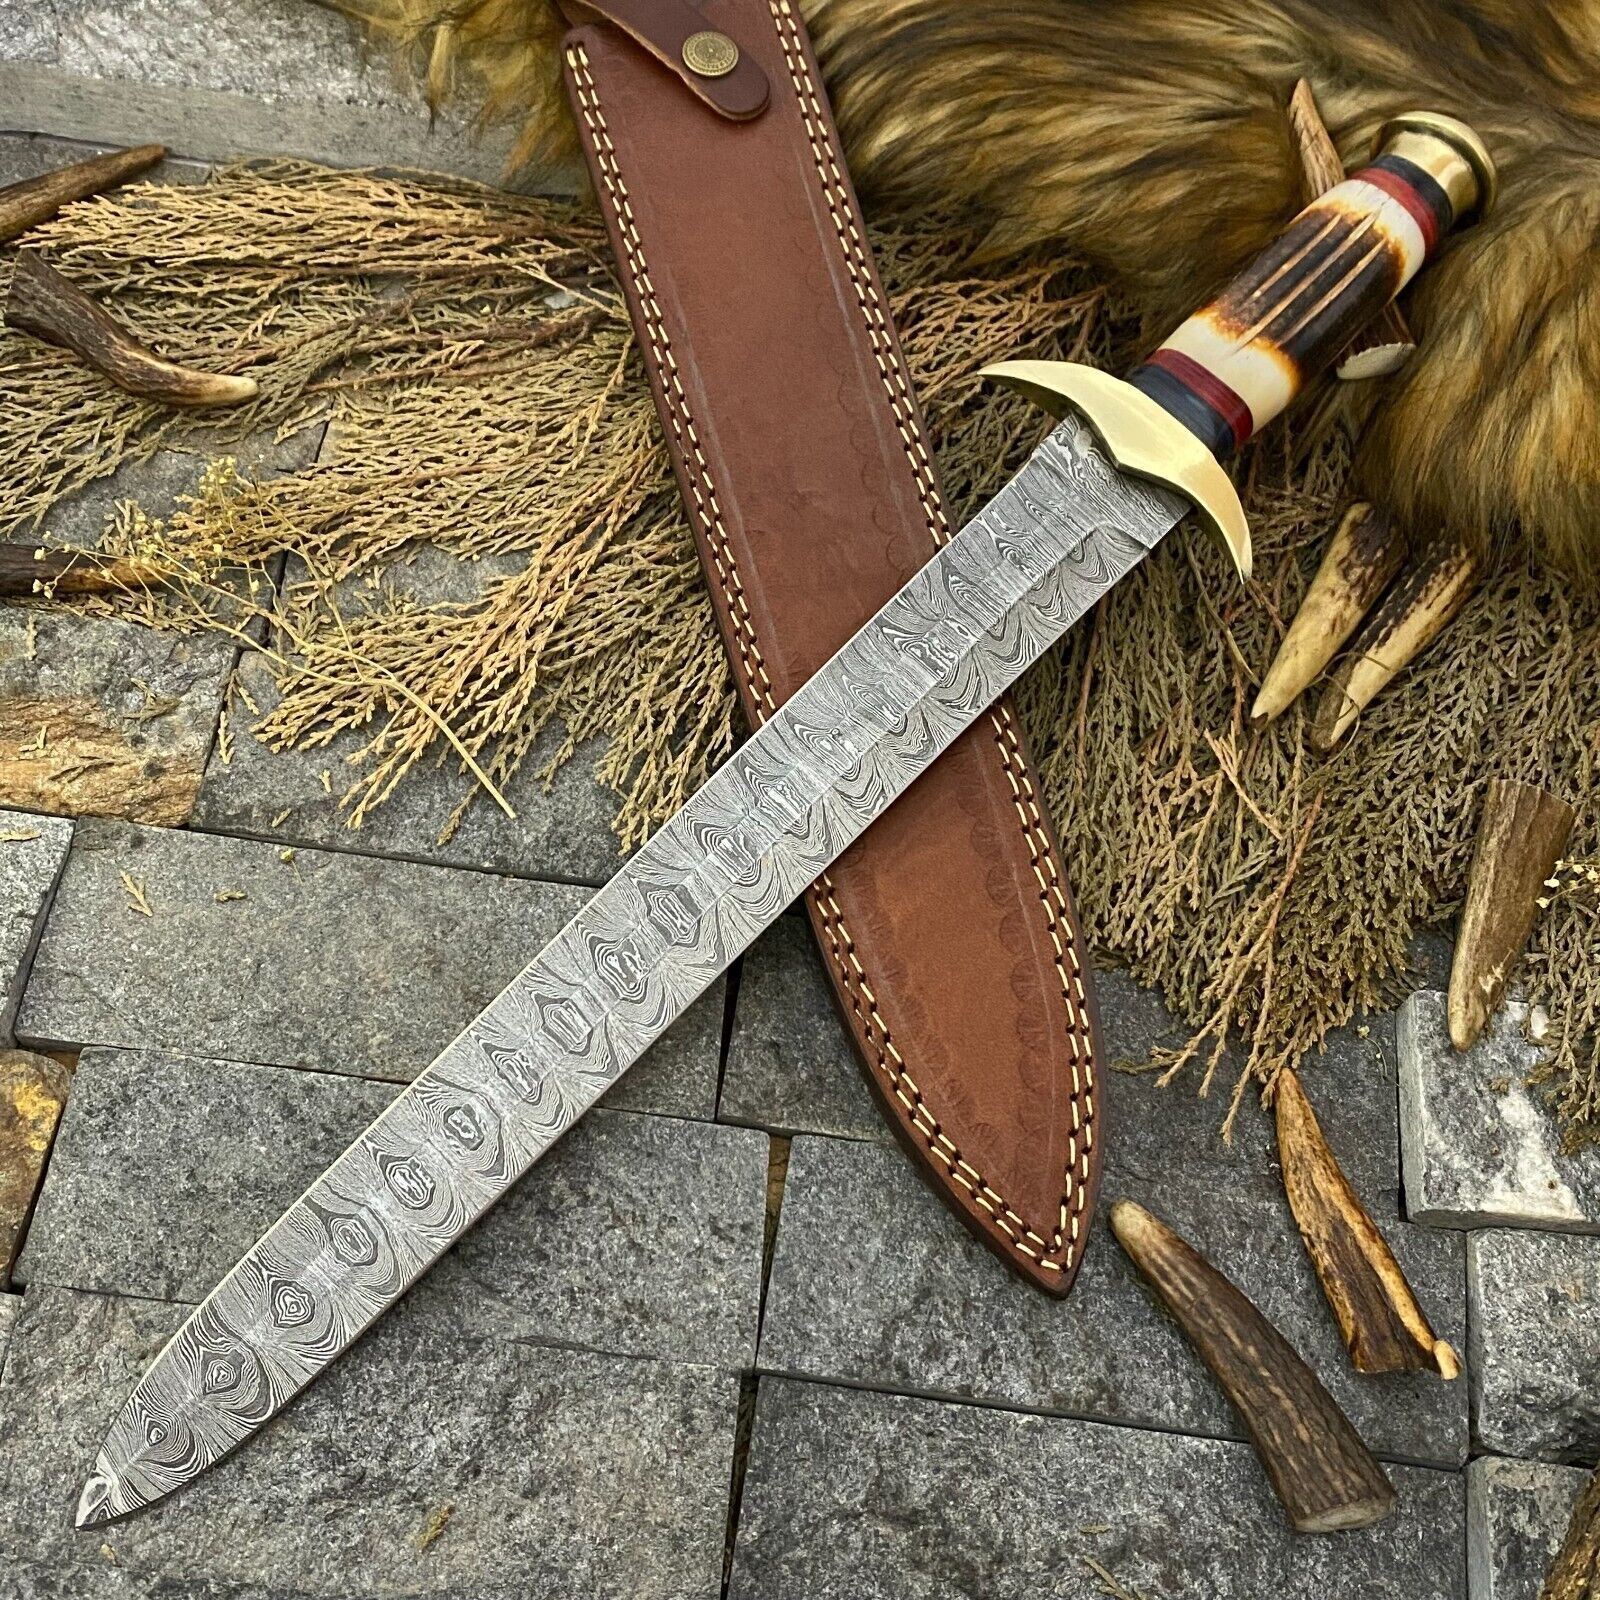 SHARDBLADE CUStOM HAND FORGED DAMASCUS STEEL HUNTING BIG BOWIE KNIFE + SHEATH